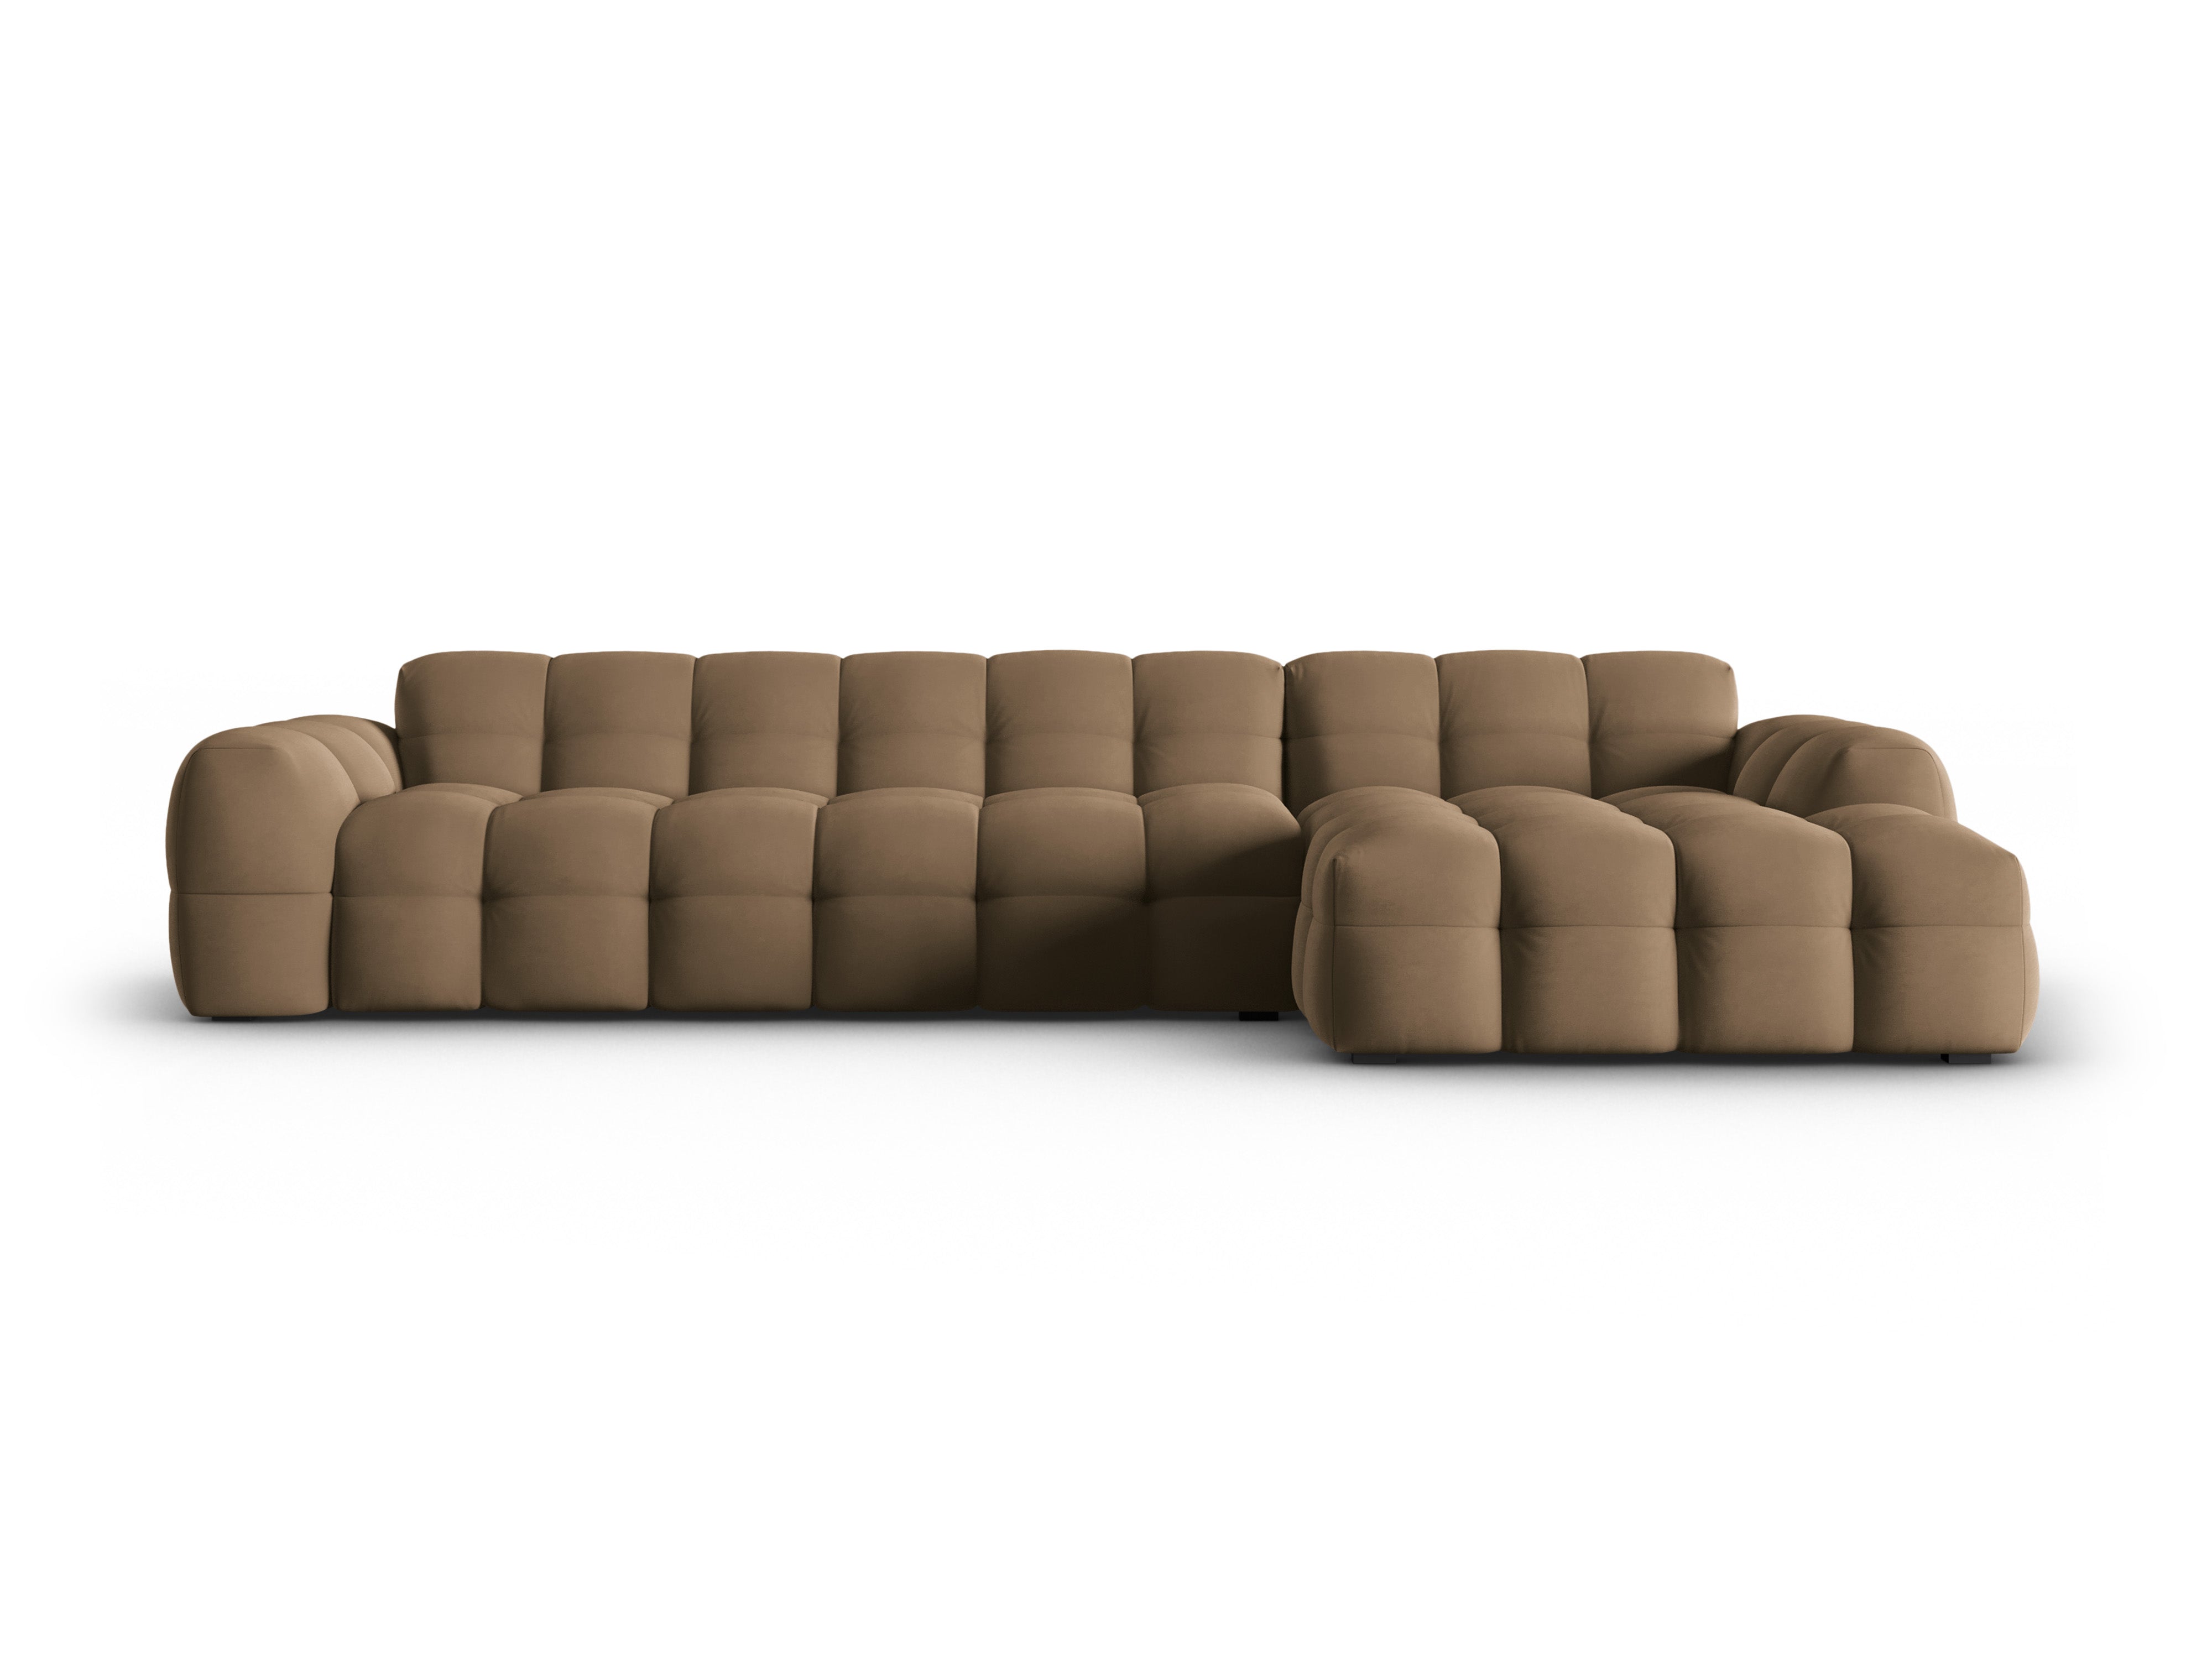 Velvet Right Corner Sofa, "Nino", 4 Seats, 320x170x68
Made in Europe, Maison Heritage, Eye on Design